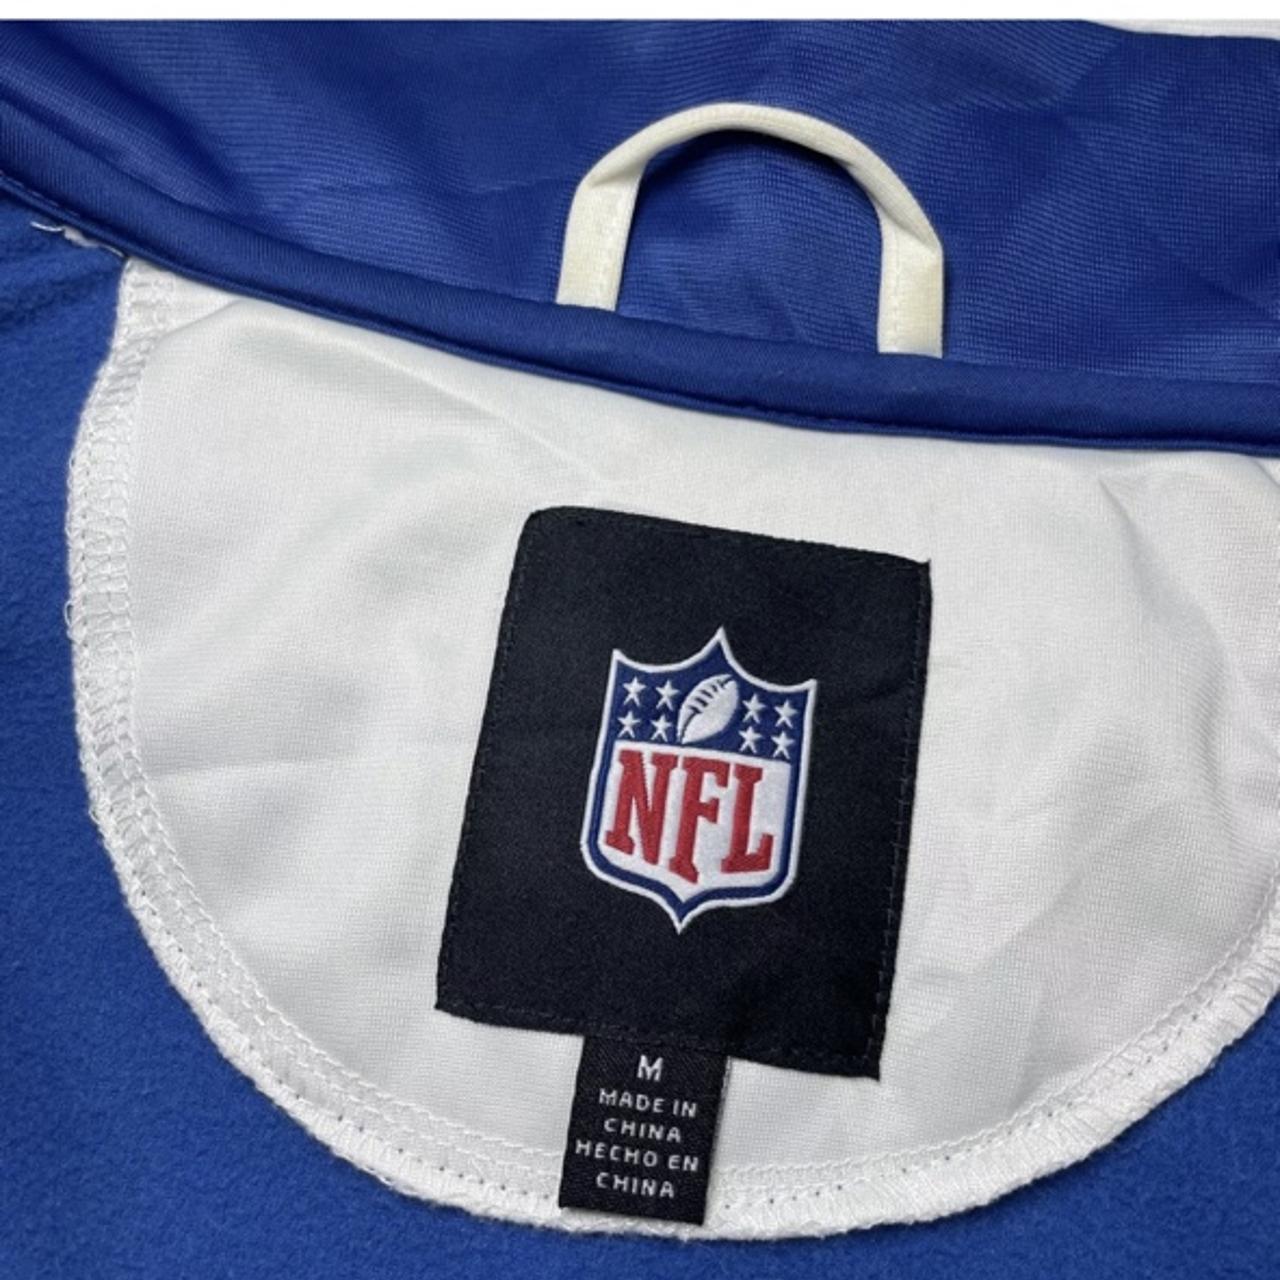 NFL Men's Cream and Blue Jacket (2)